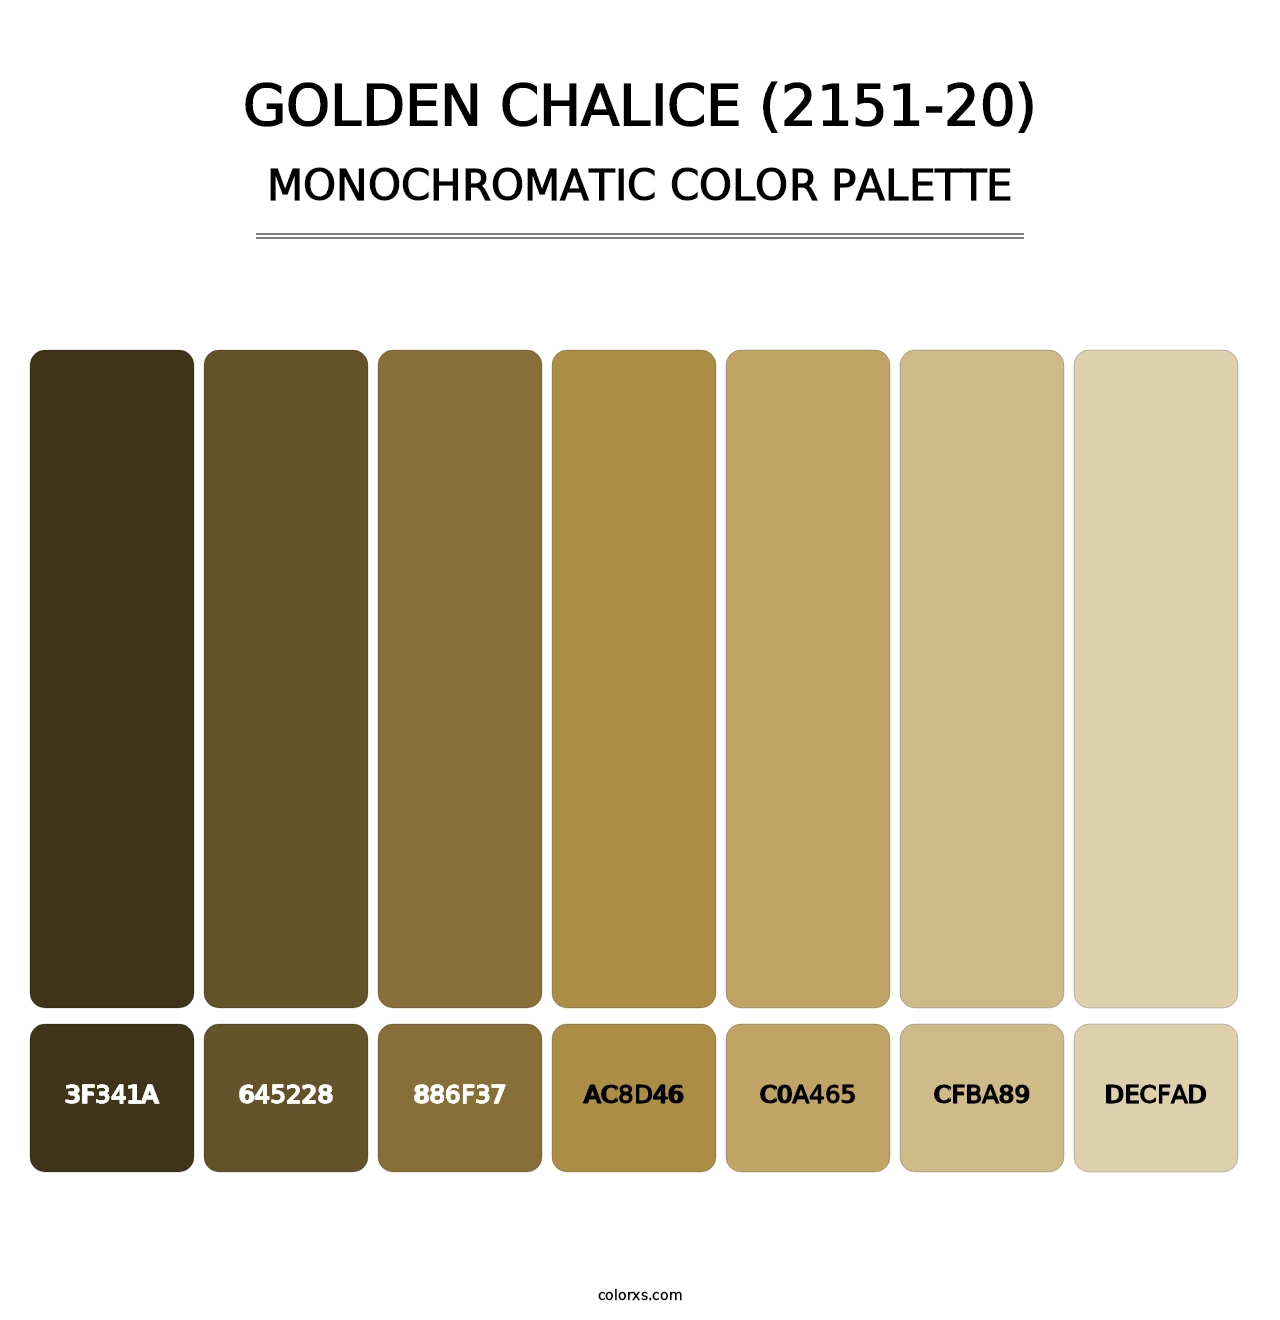 Golden Chalice (2151-20) - Monochromatic Color Palette